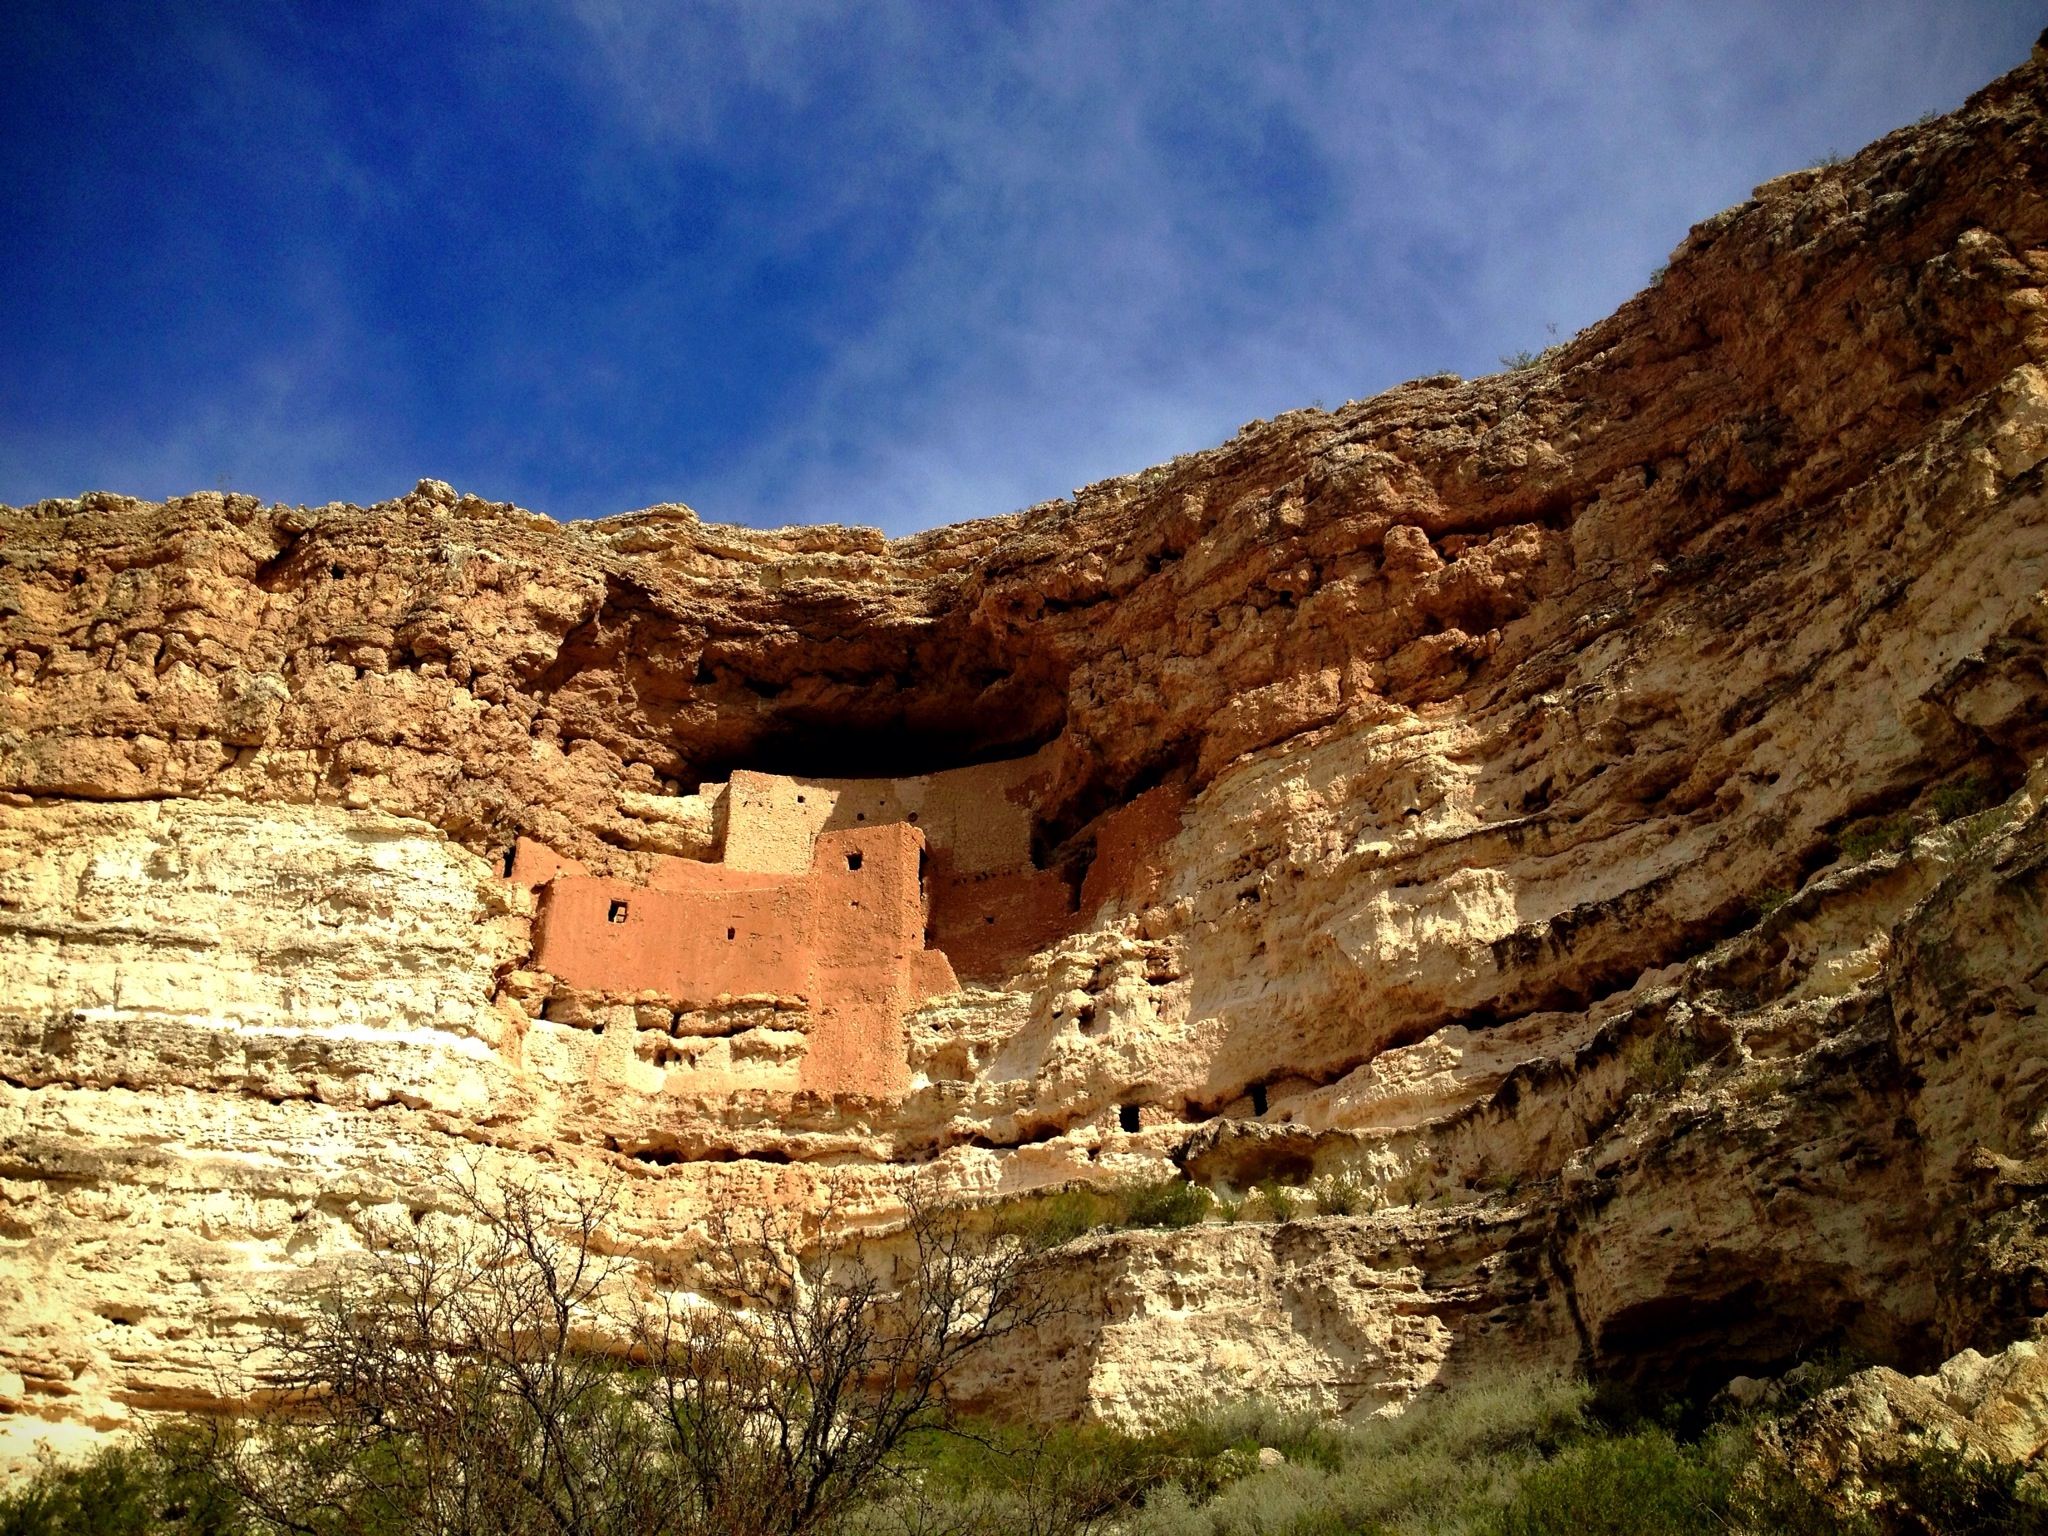 Indian ruins in Arizona | Arizona beauty | Pinterest | Ruins ...